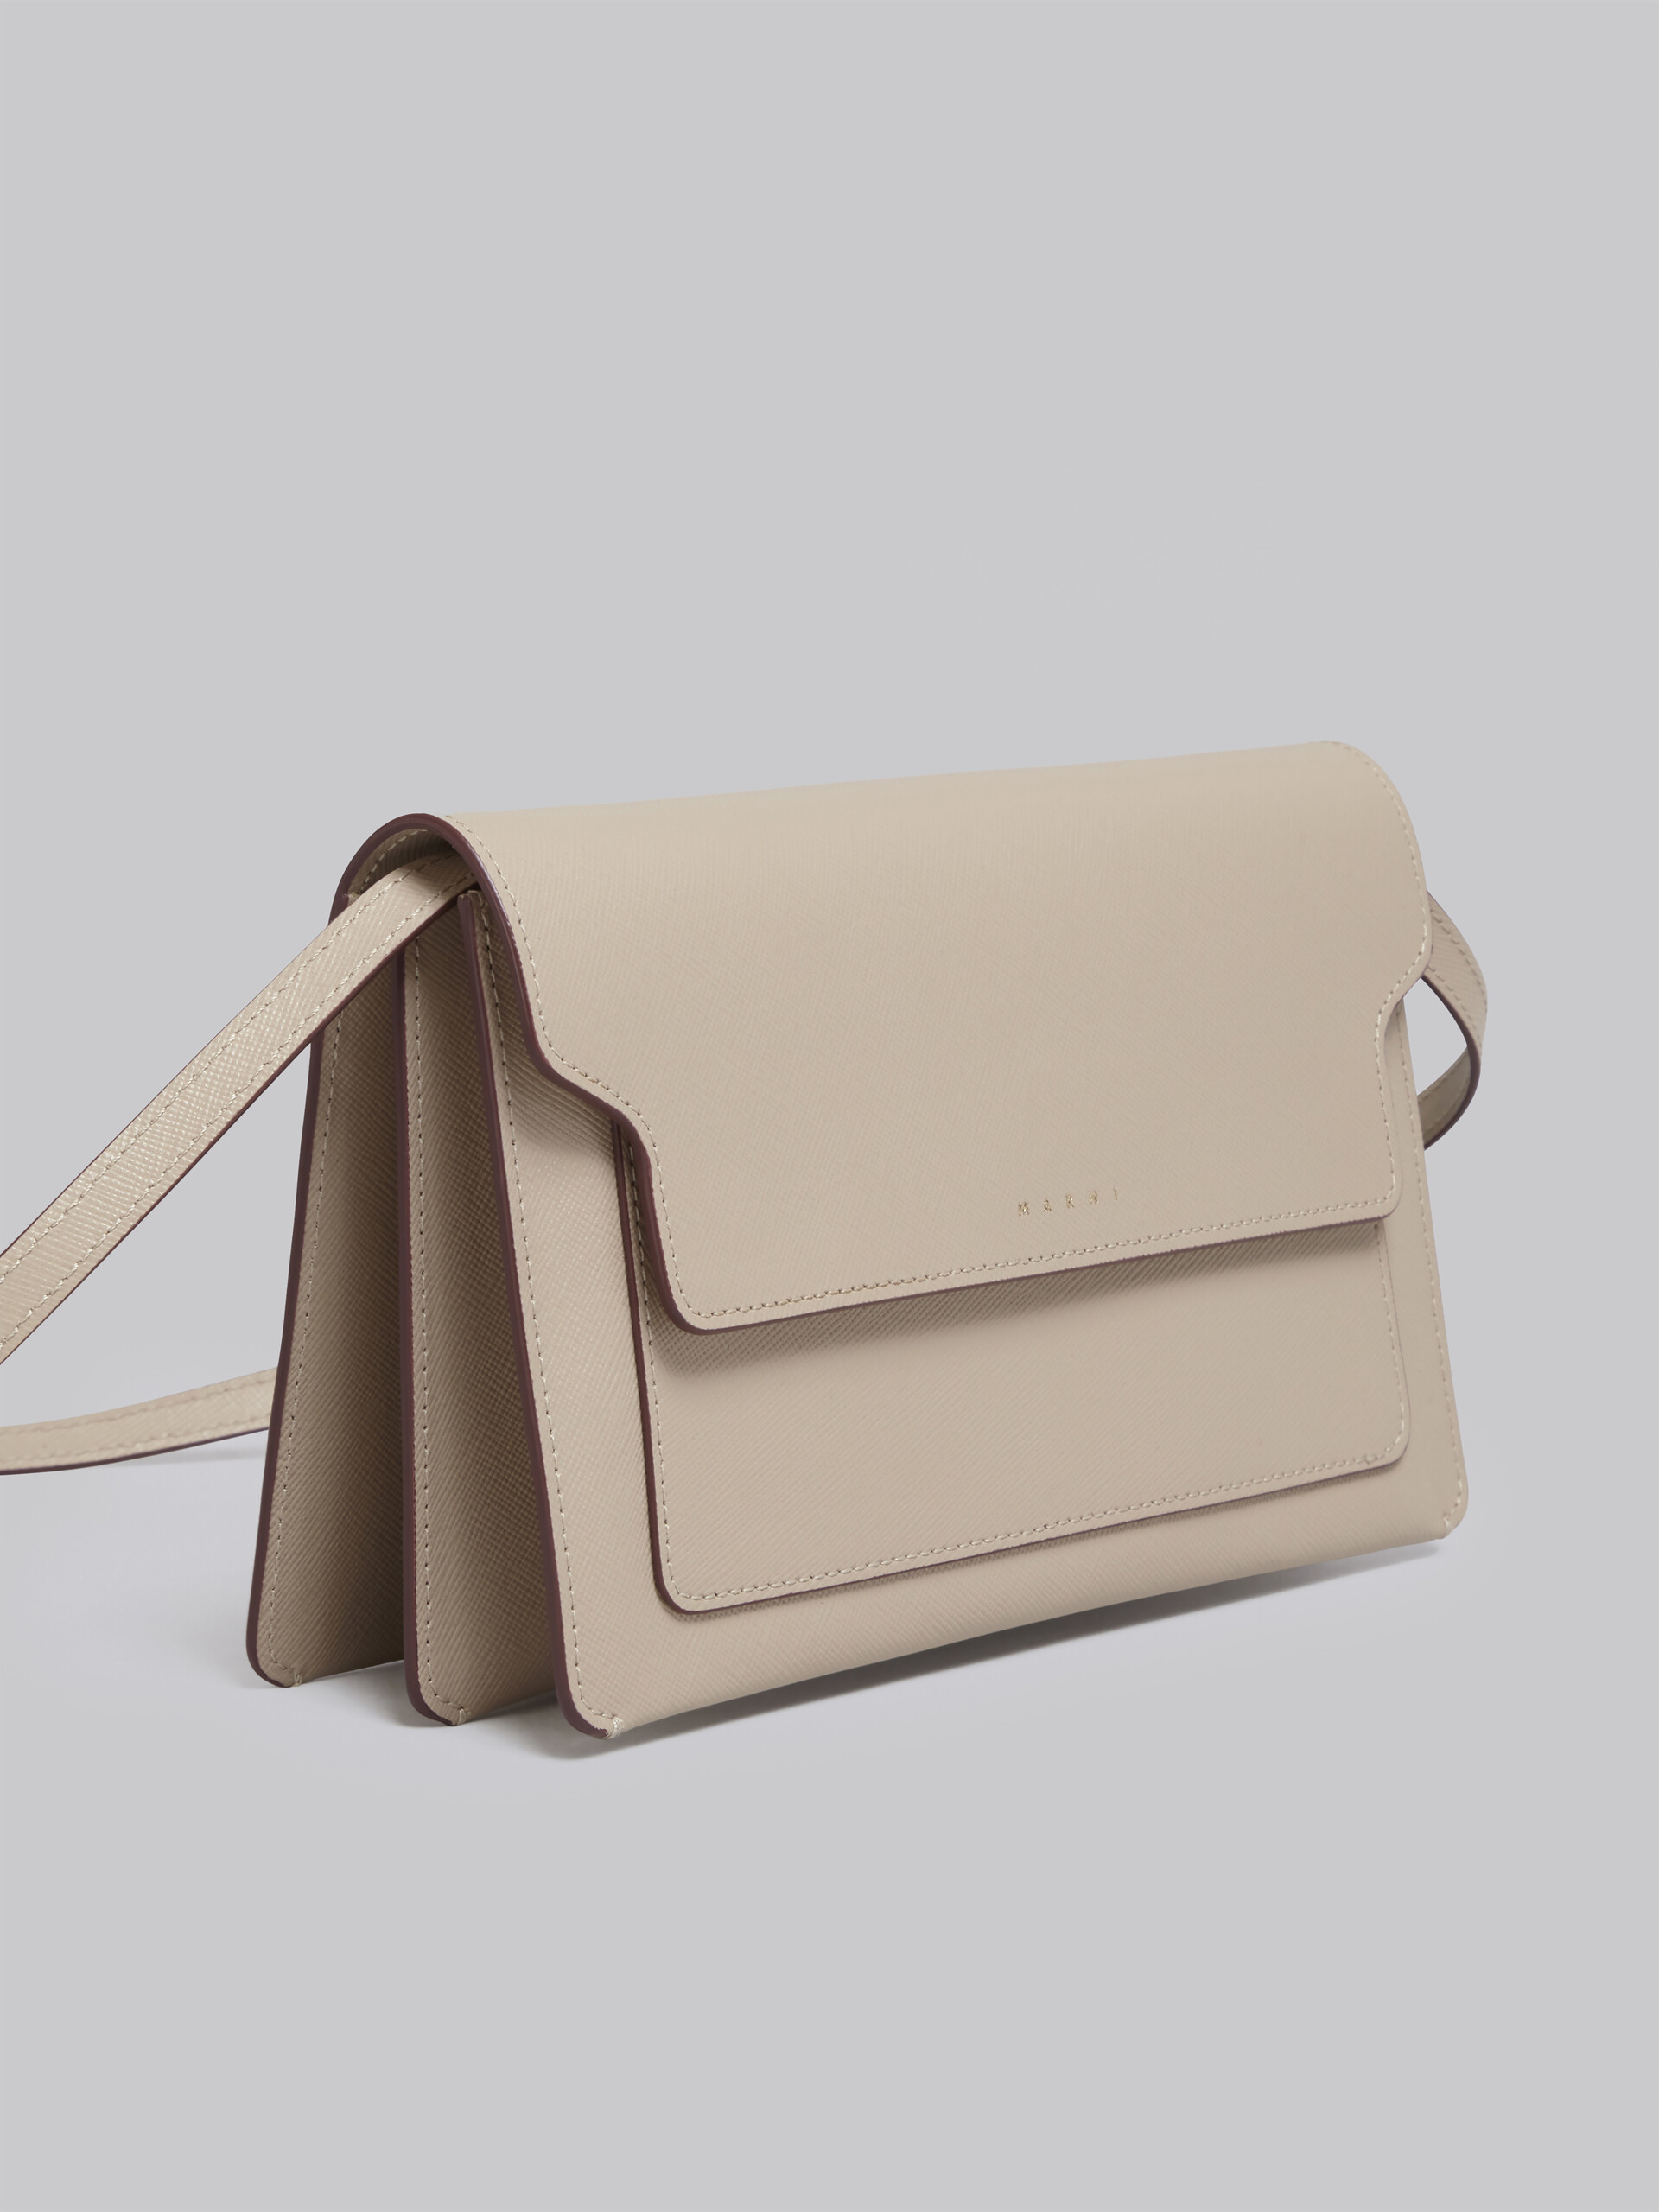 TRUNK clutch bag in beige saffiano leather - Pochette - Image 4